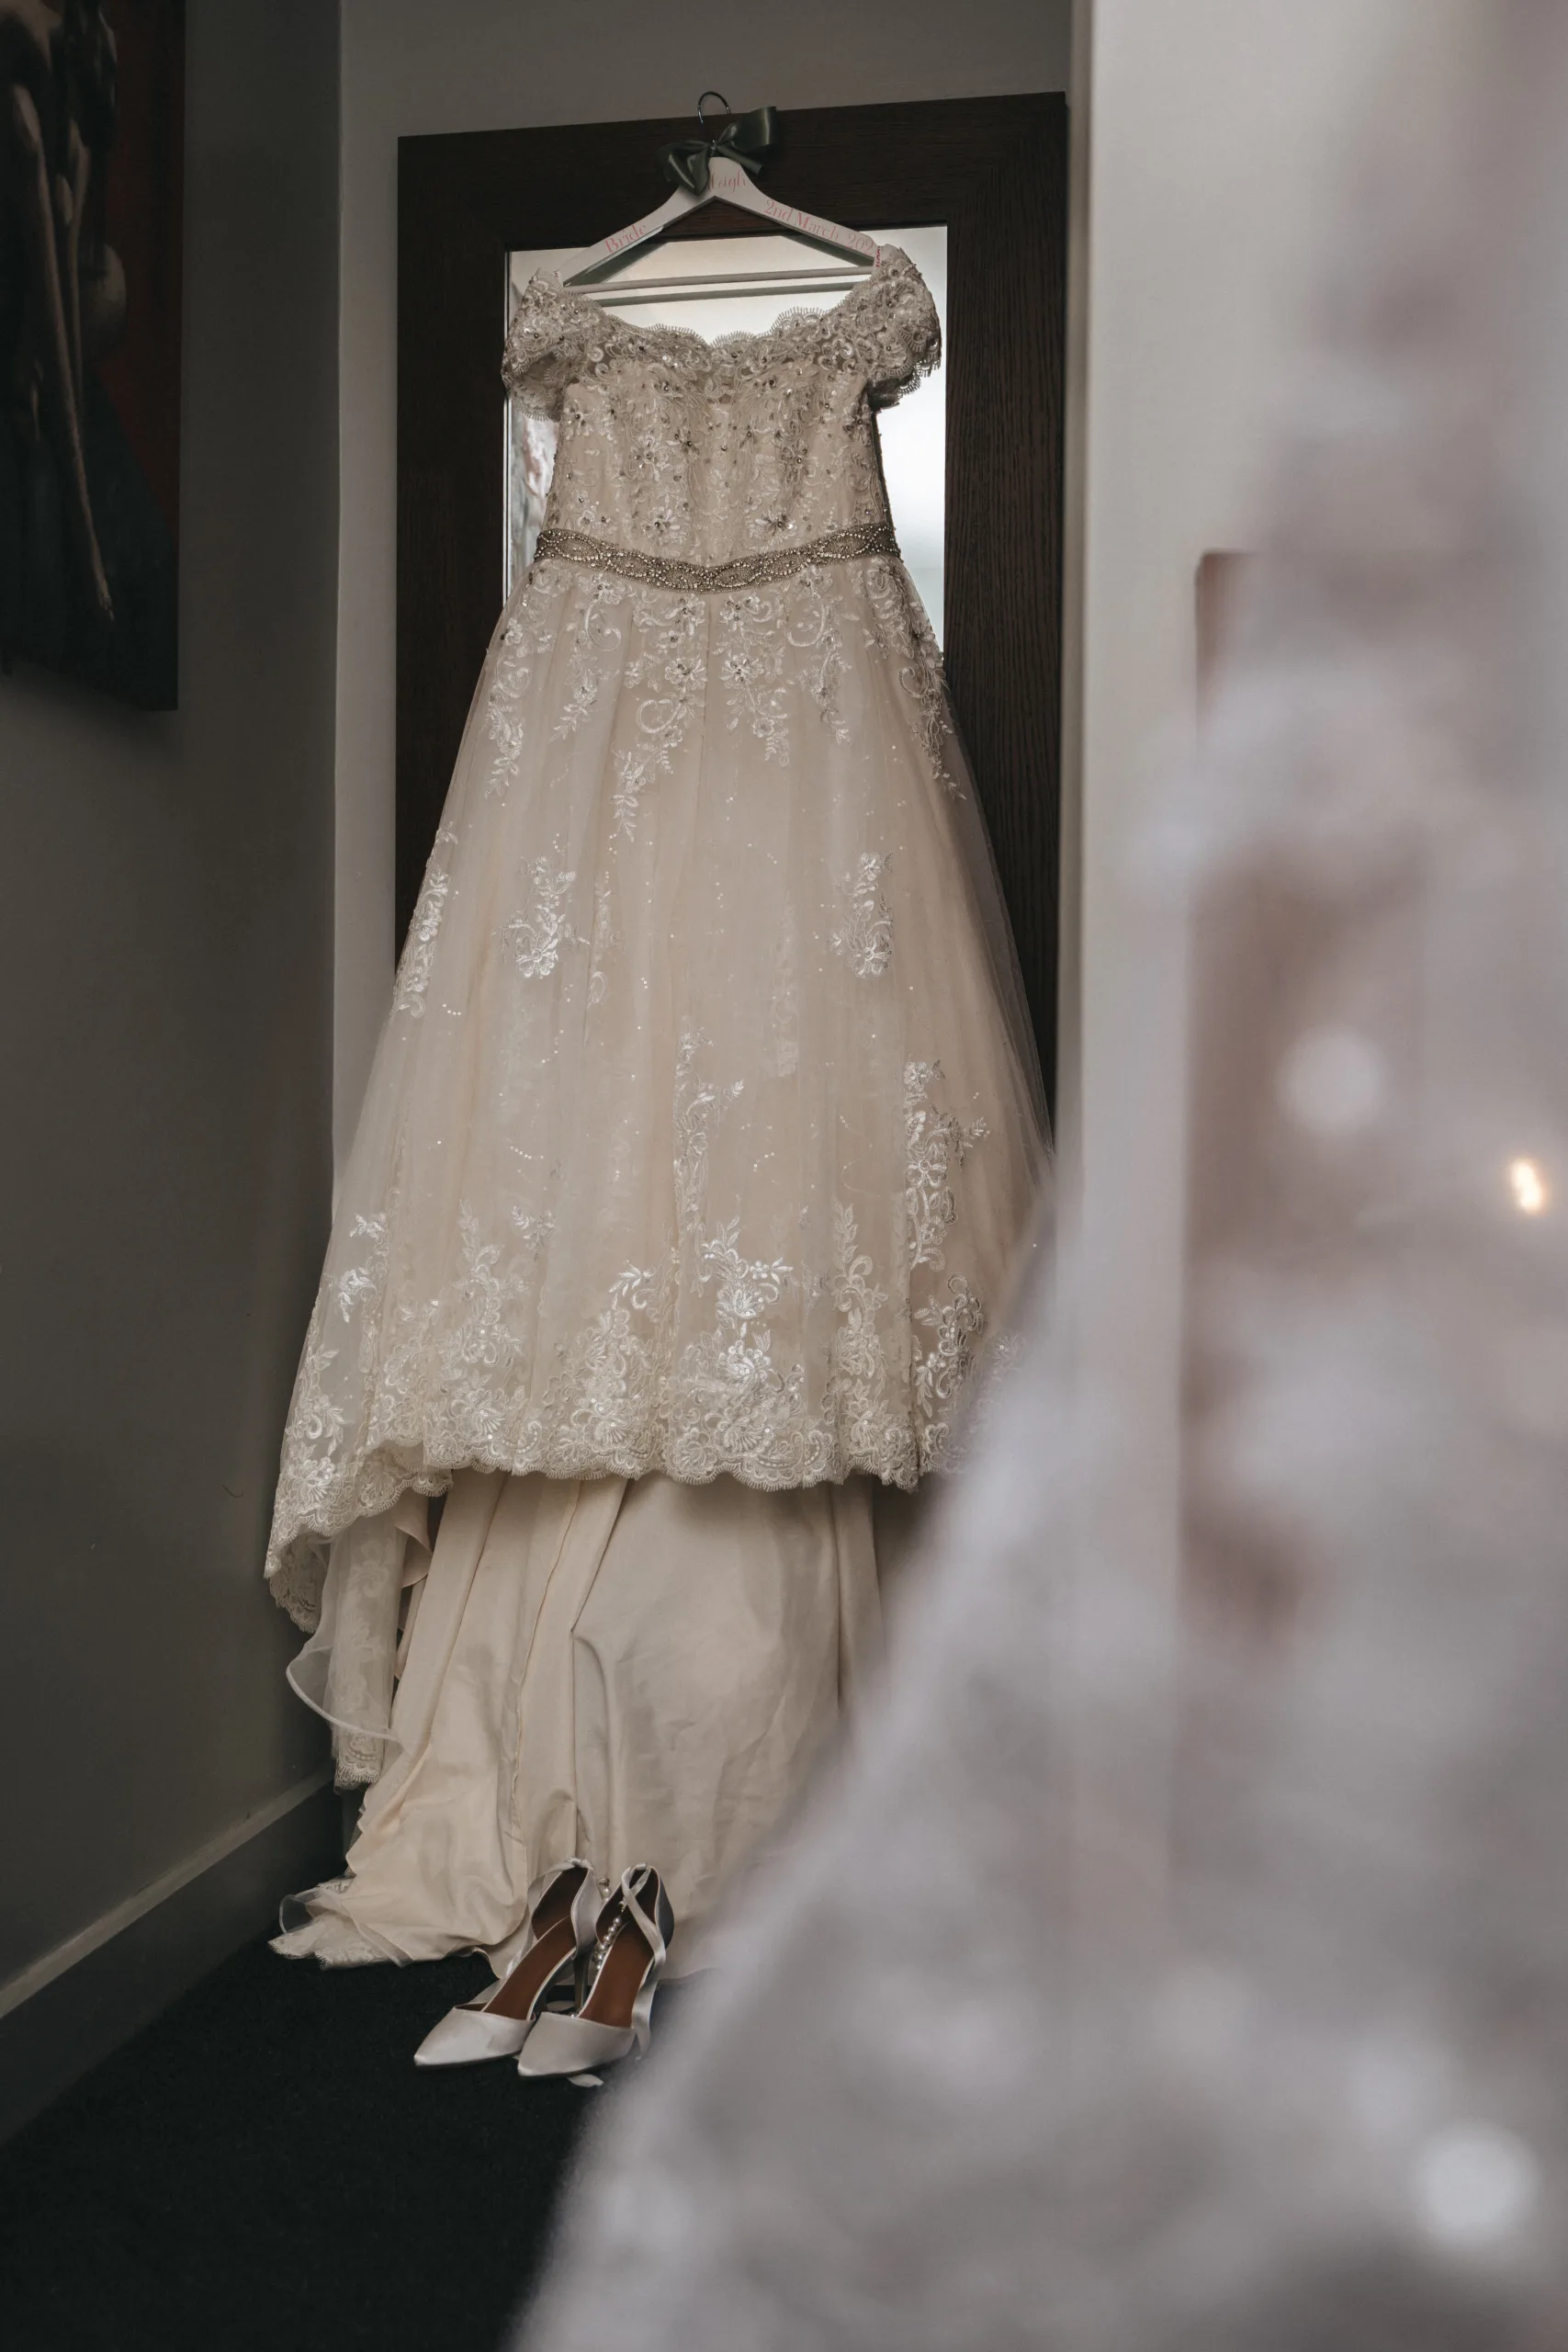 A wedding dress hanging in a doorway.